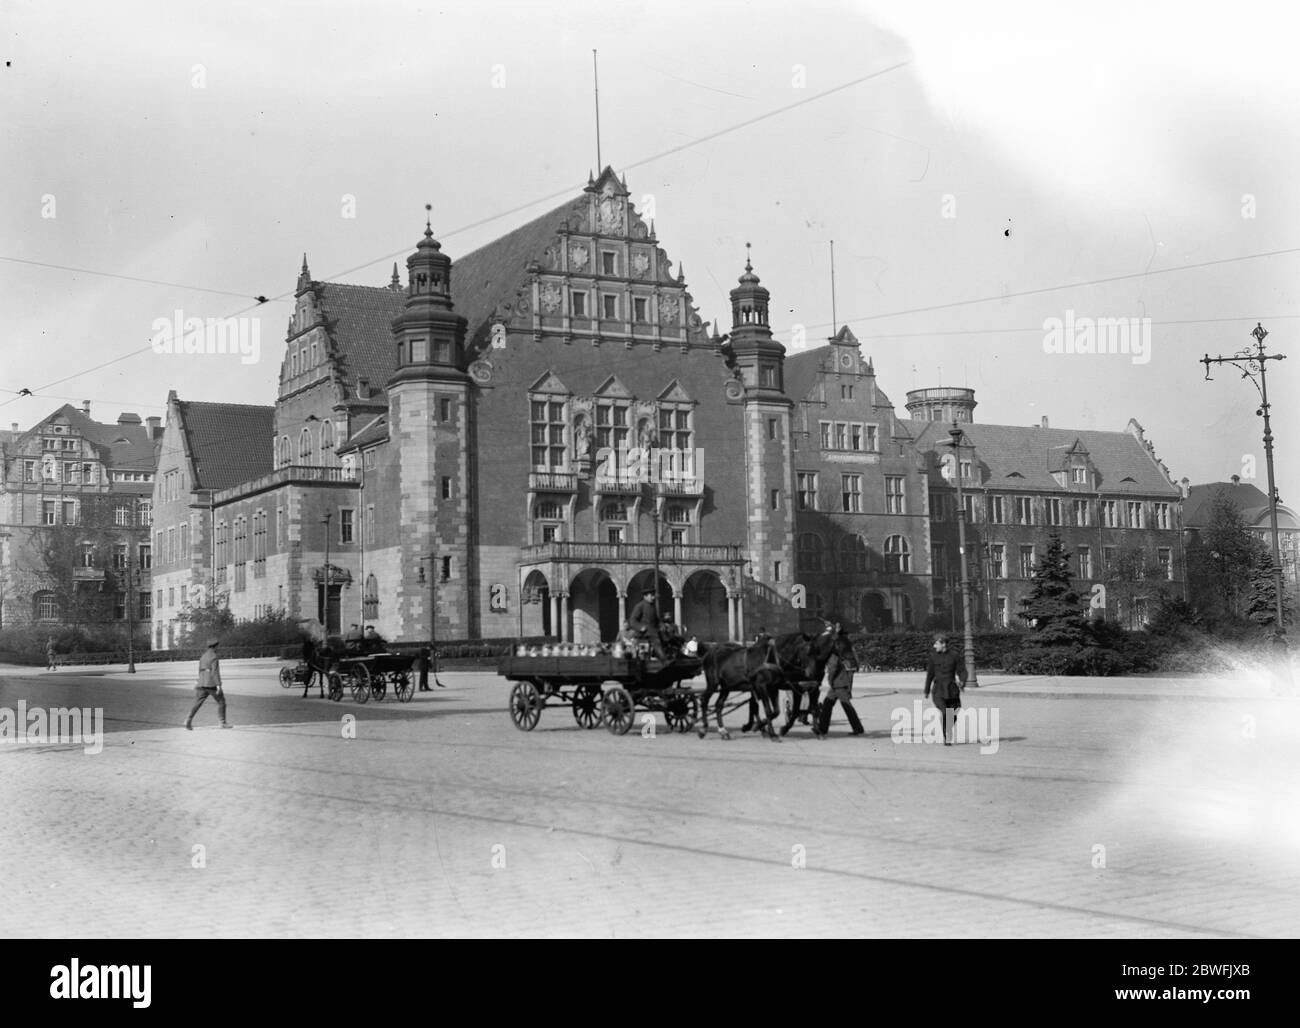 HistoricalFindings Photo Court House,Old Market,Posen,Poznan Poland,1890s